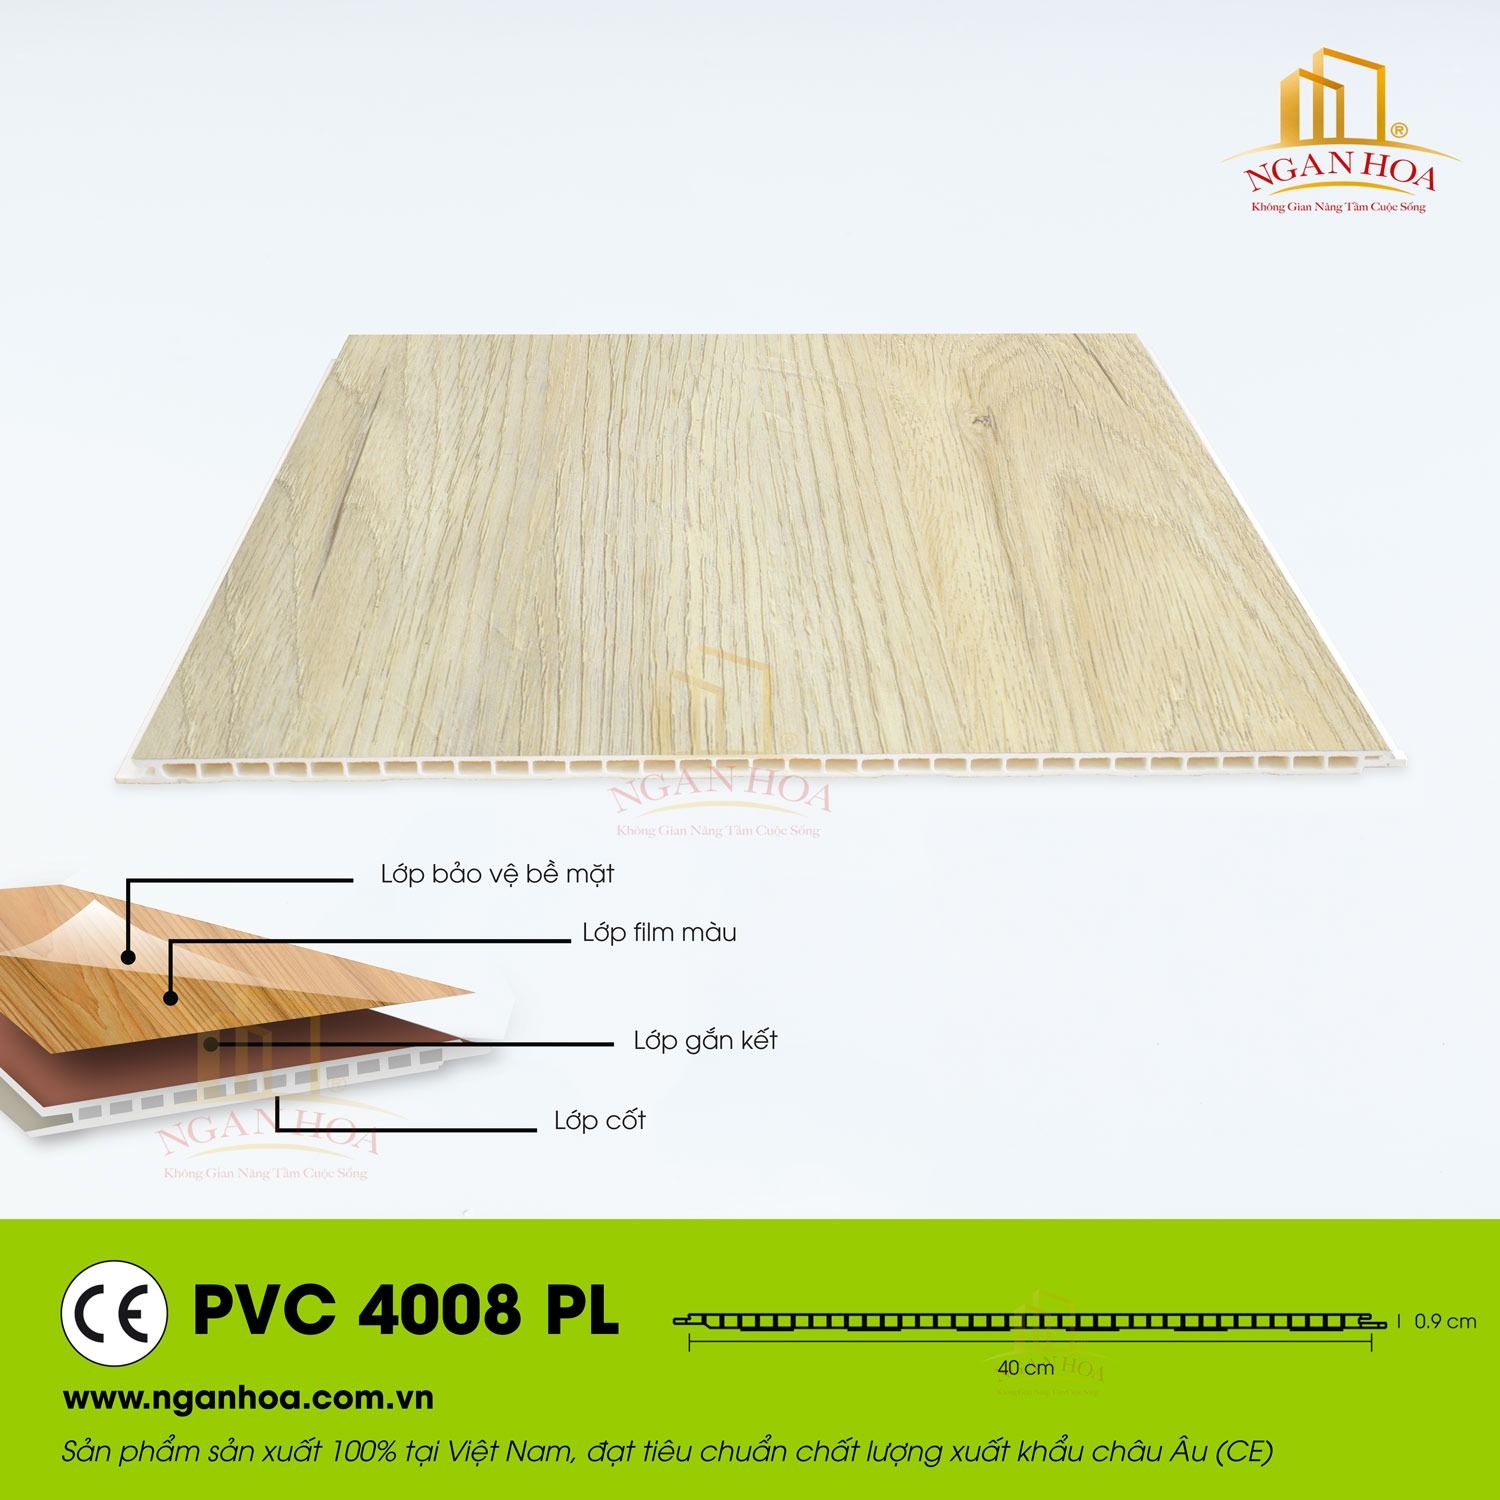 PVC-4008-PL